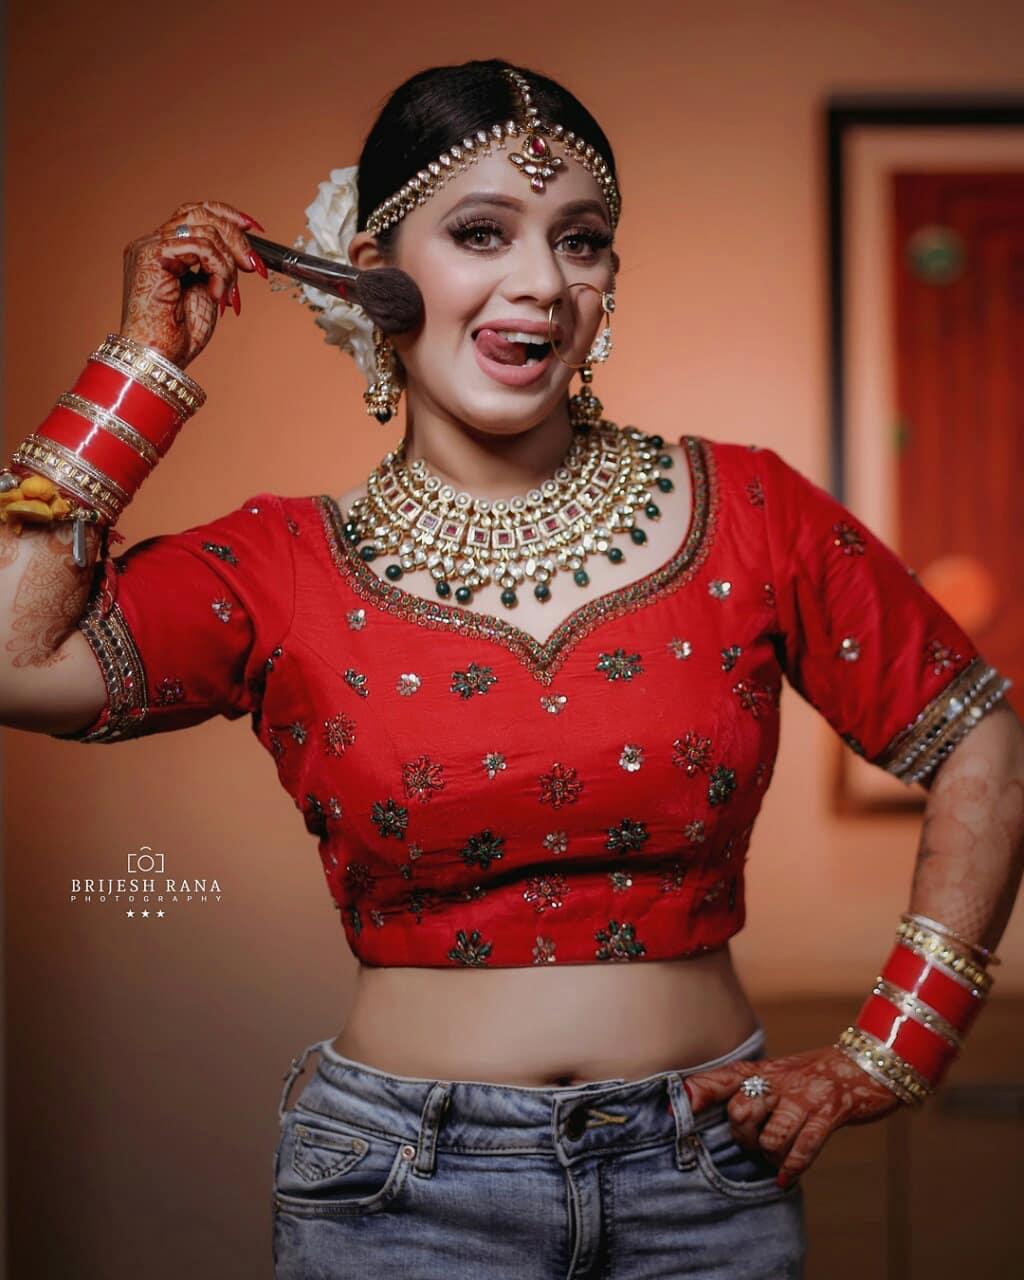 Indian Bridal Dramatic Portrait Photoshoot using One Light + BTS | Nikon Z6  with 35mm 1.8 - YouTube